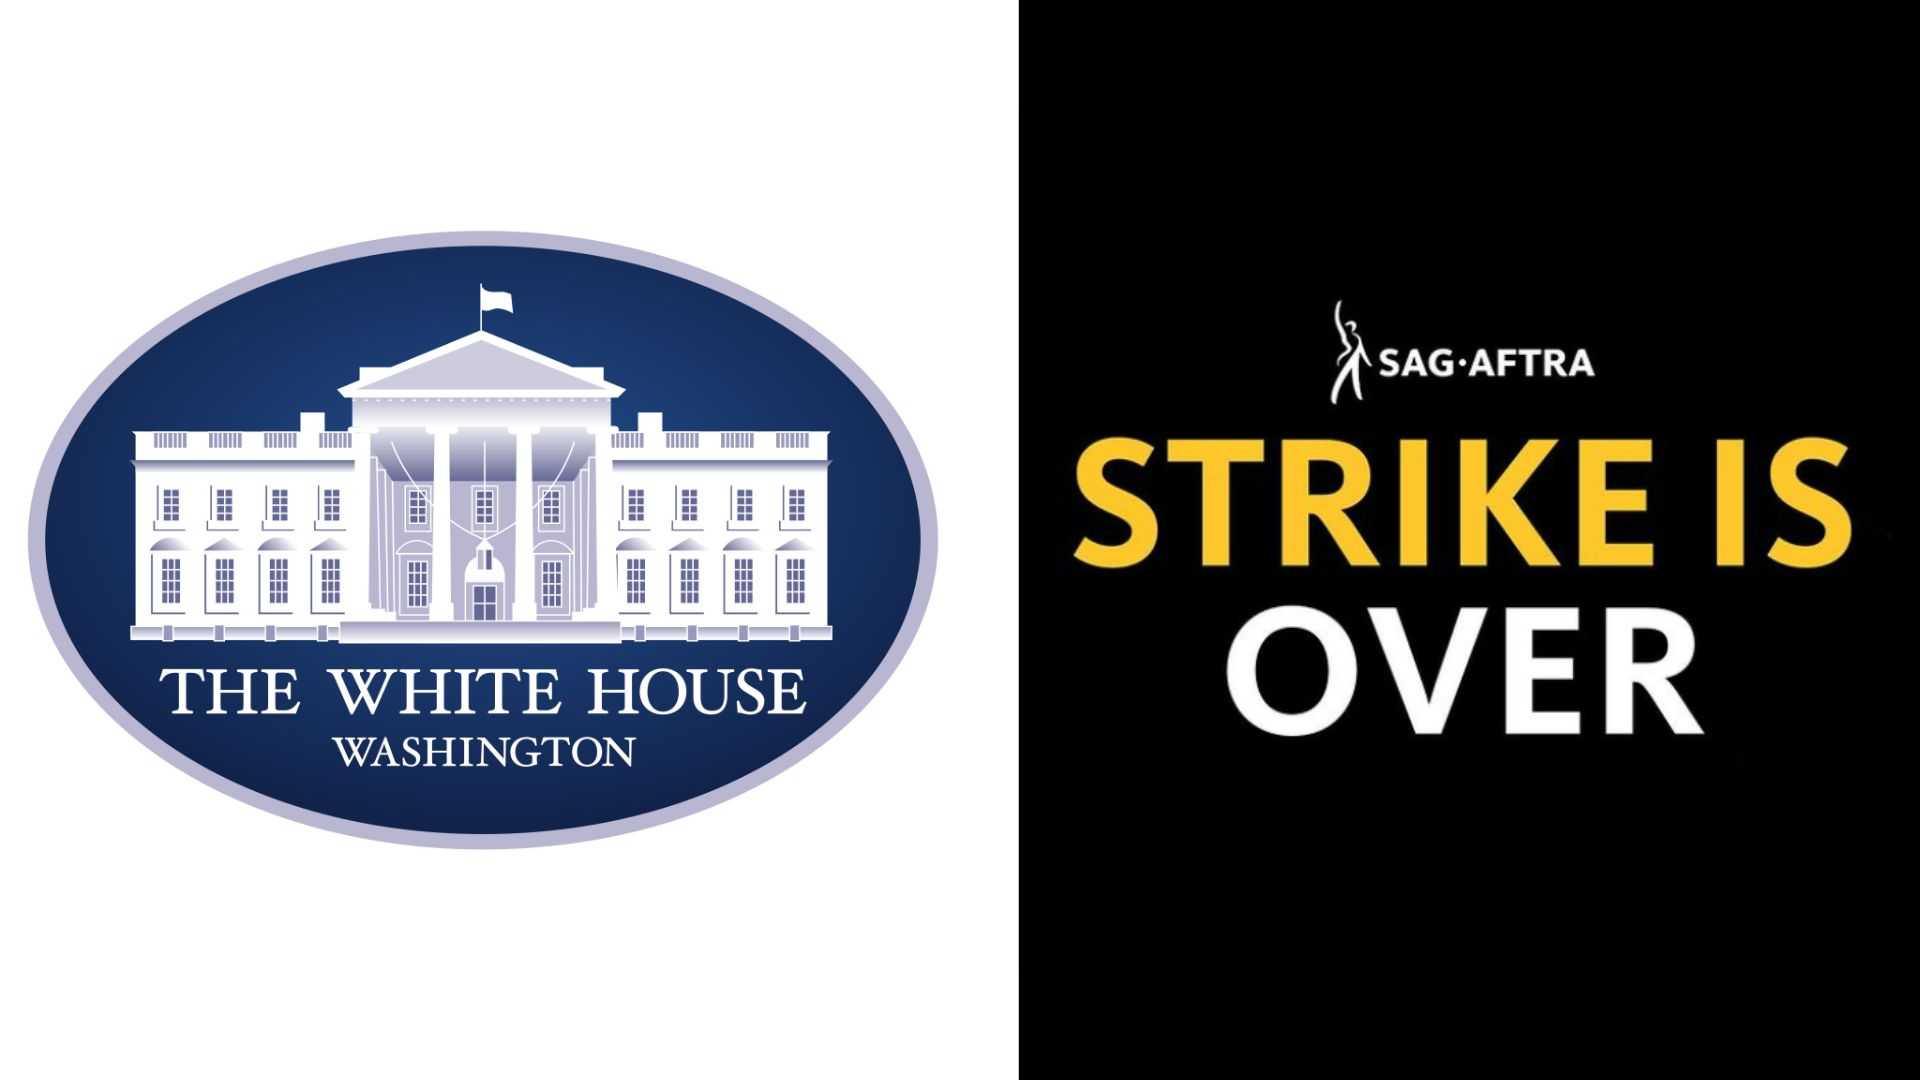 Biden on SAG-AFTRA agreement: ‘Collective bargaining works’